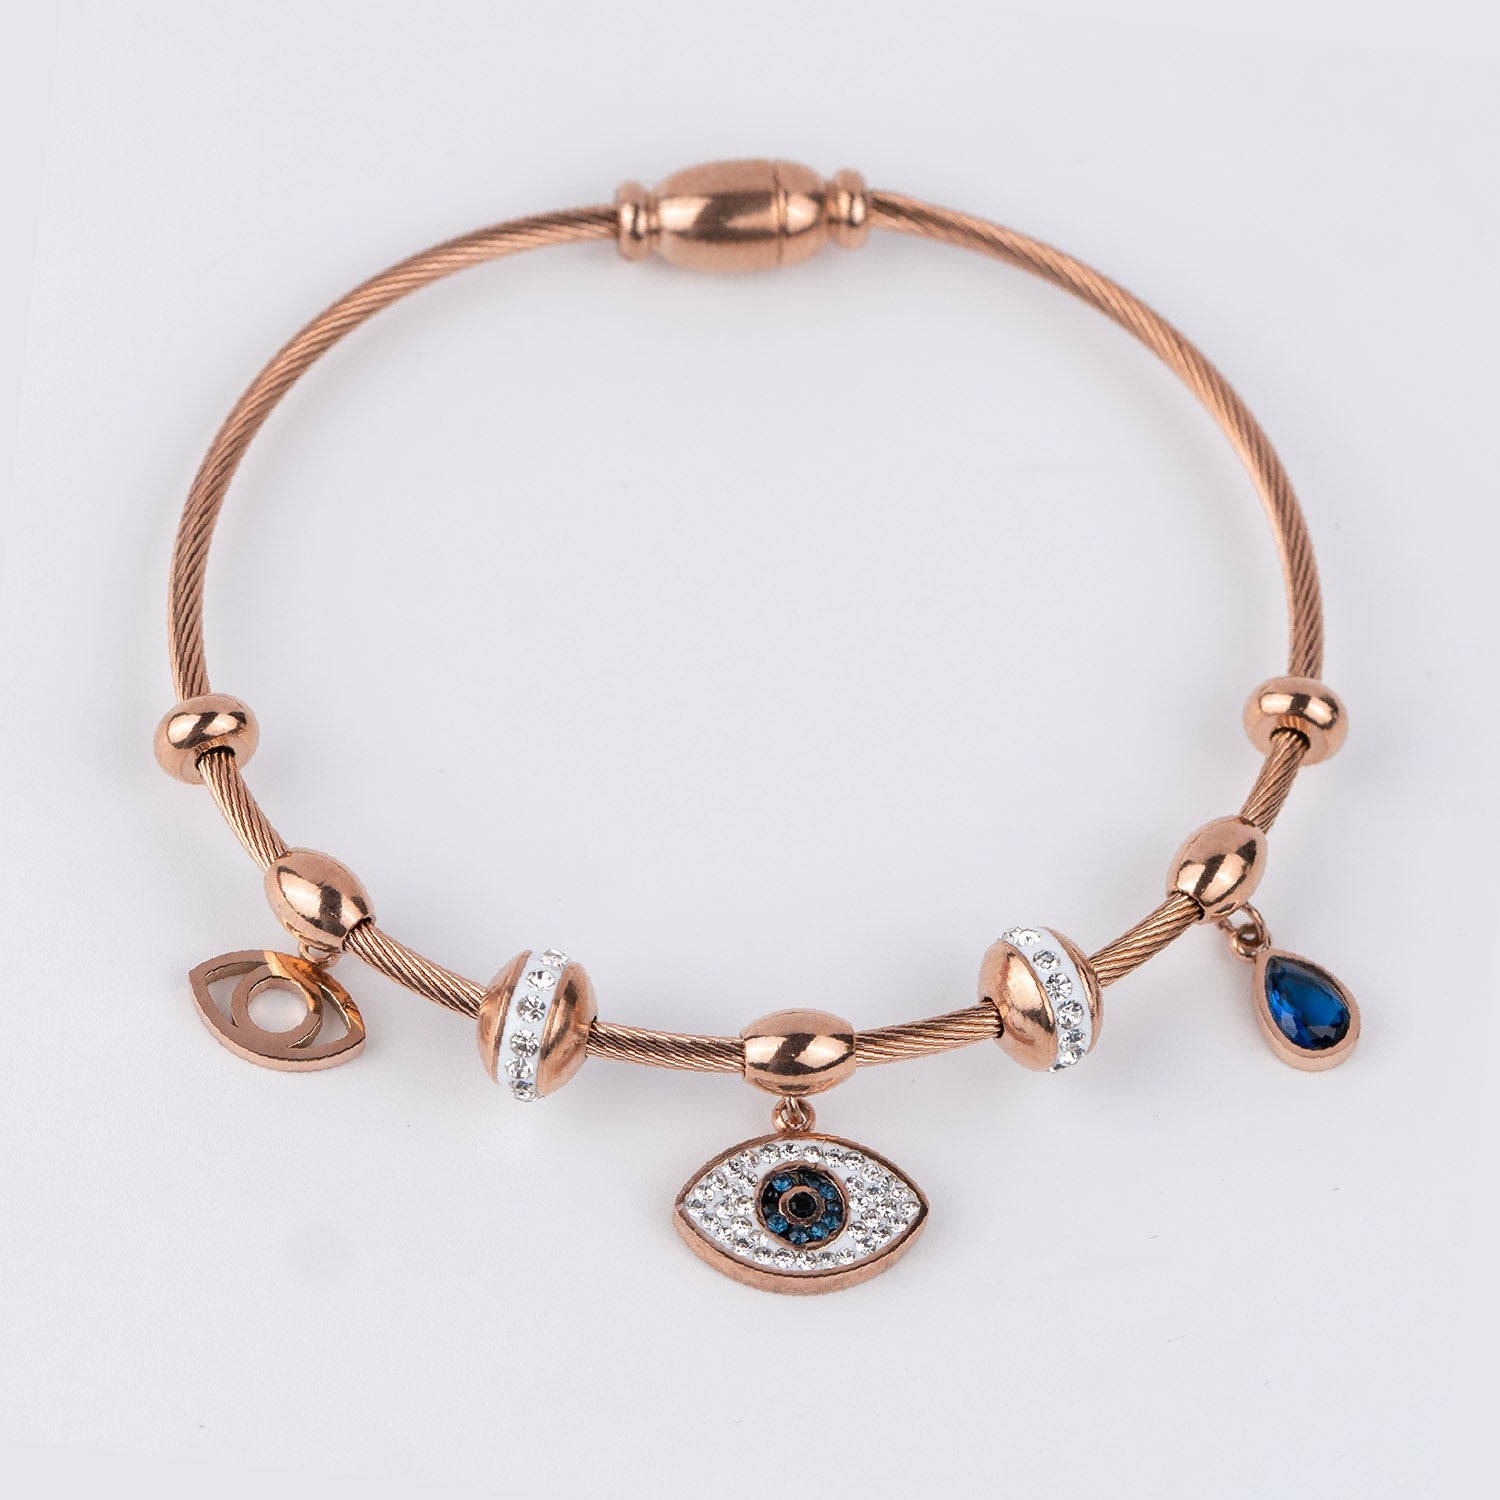 W Premium Jewellery Evil Eye Charms Dangler Bracelet